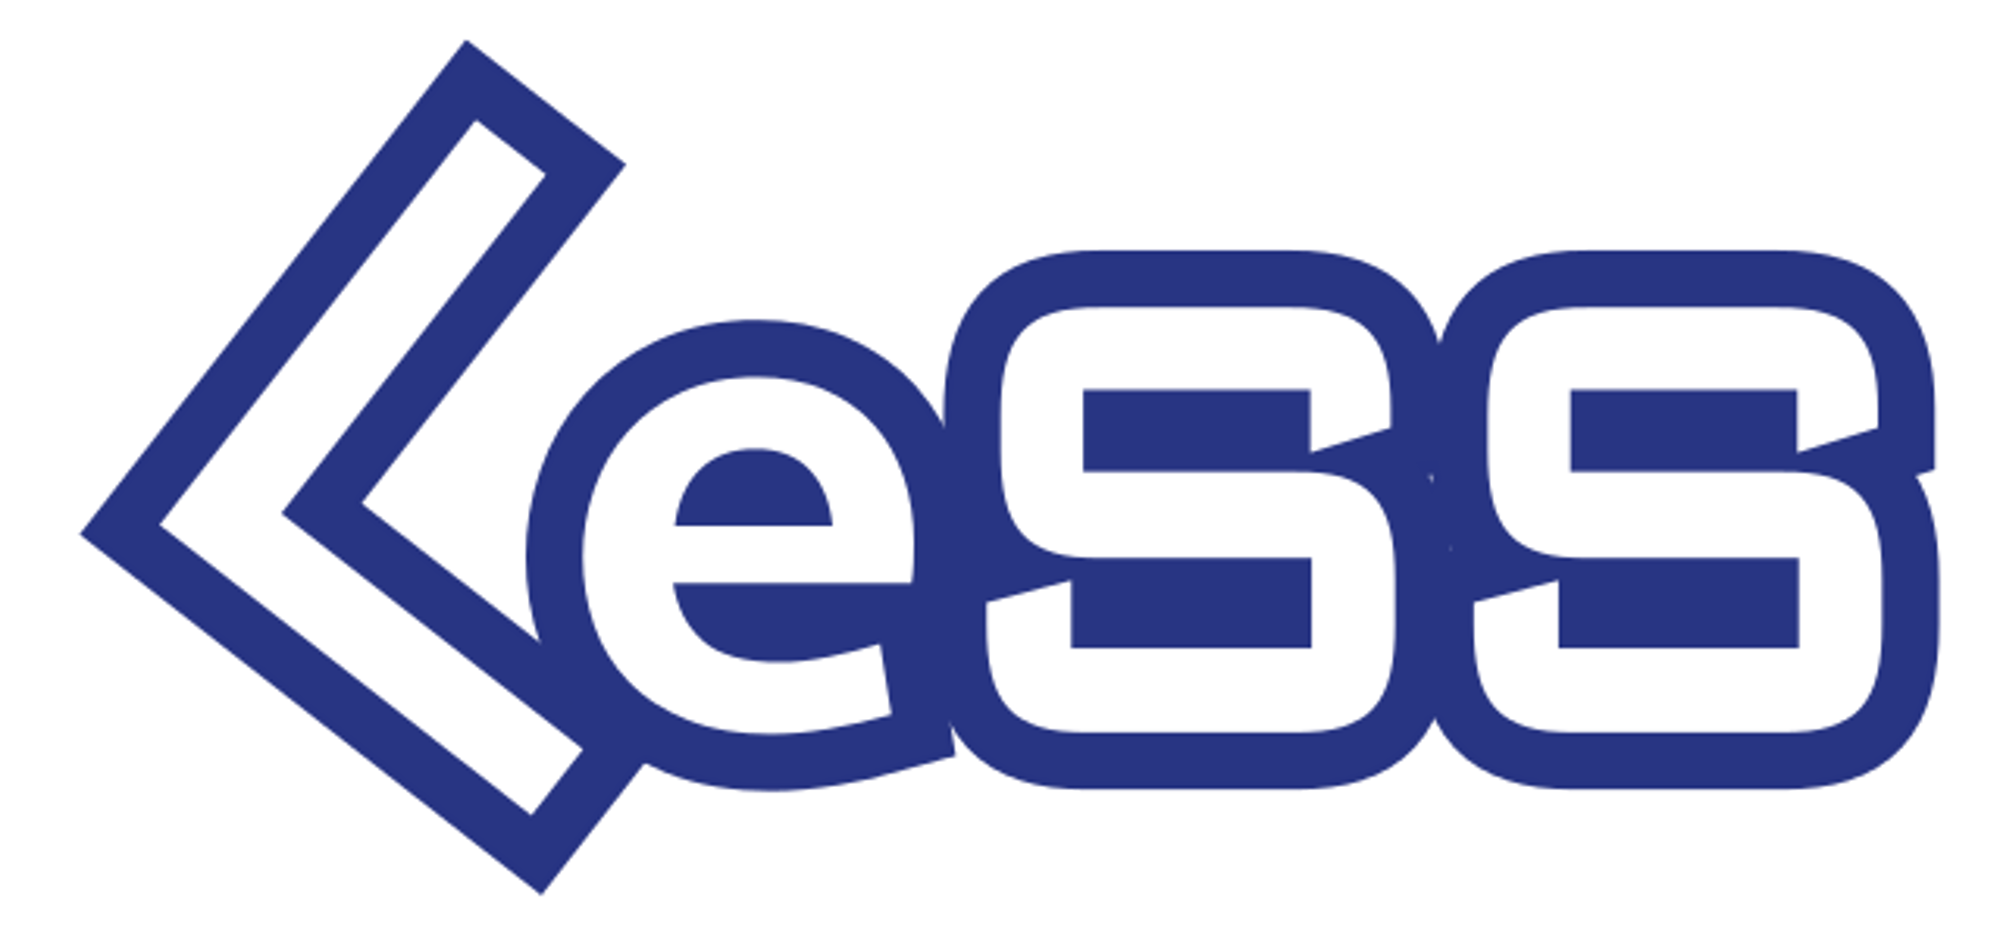 Less. Less logo. Less CSS лого. Less (язык стилей).